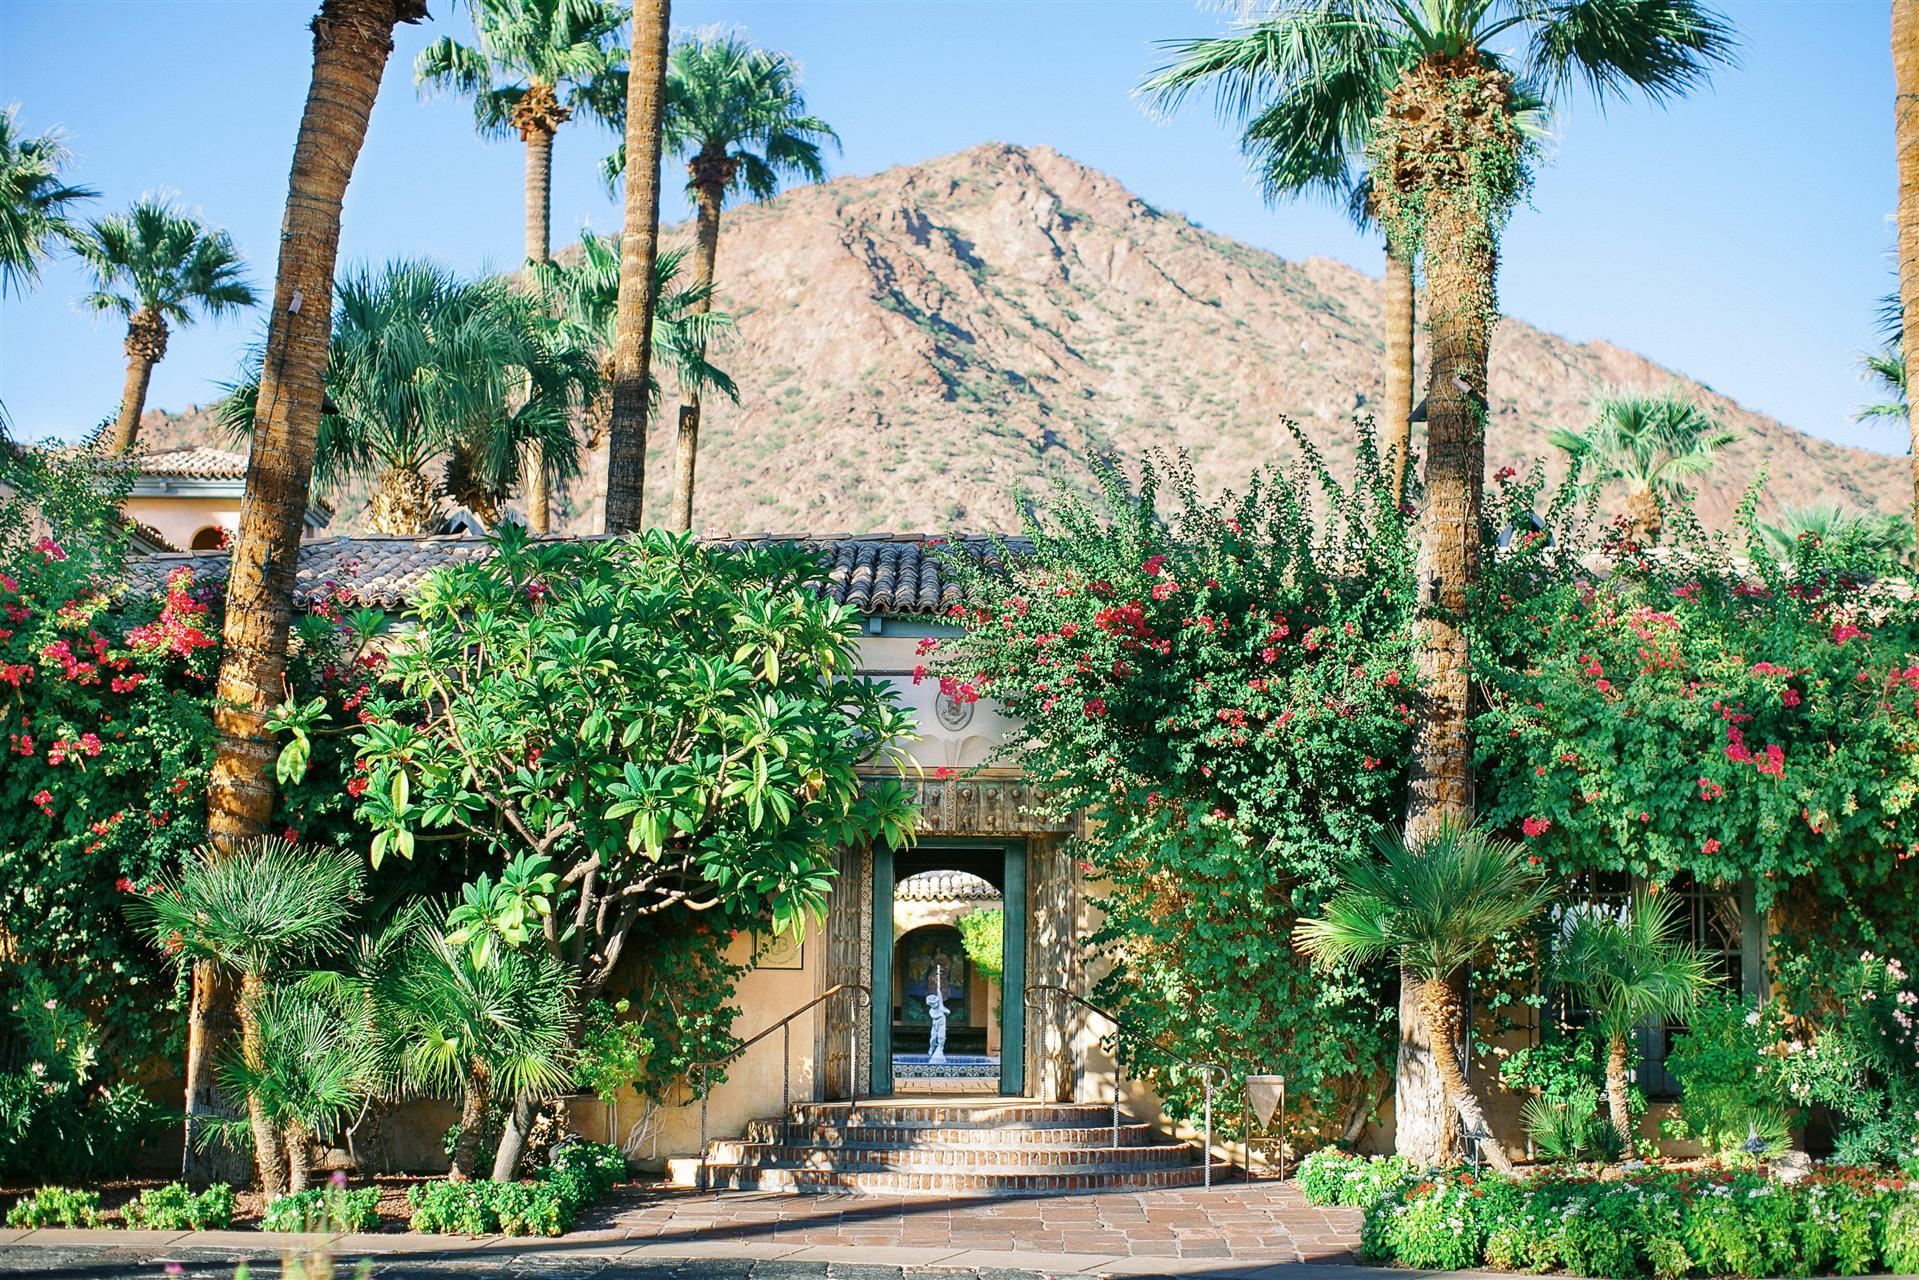 Royal Palms Resort and Spa in Phoenix, AZ